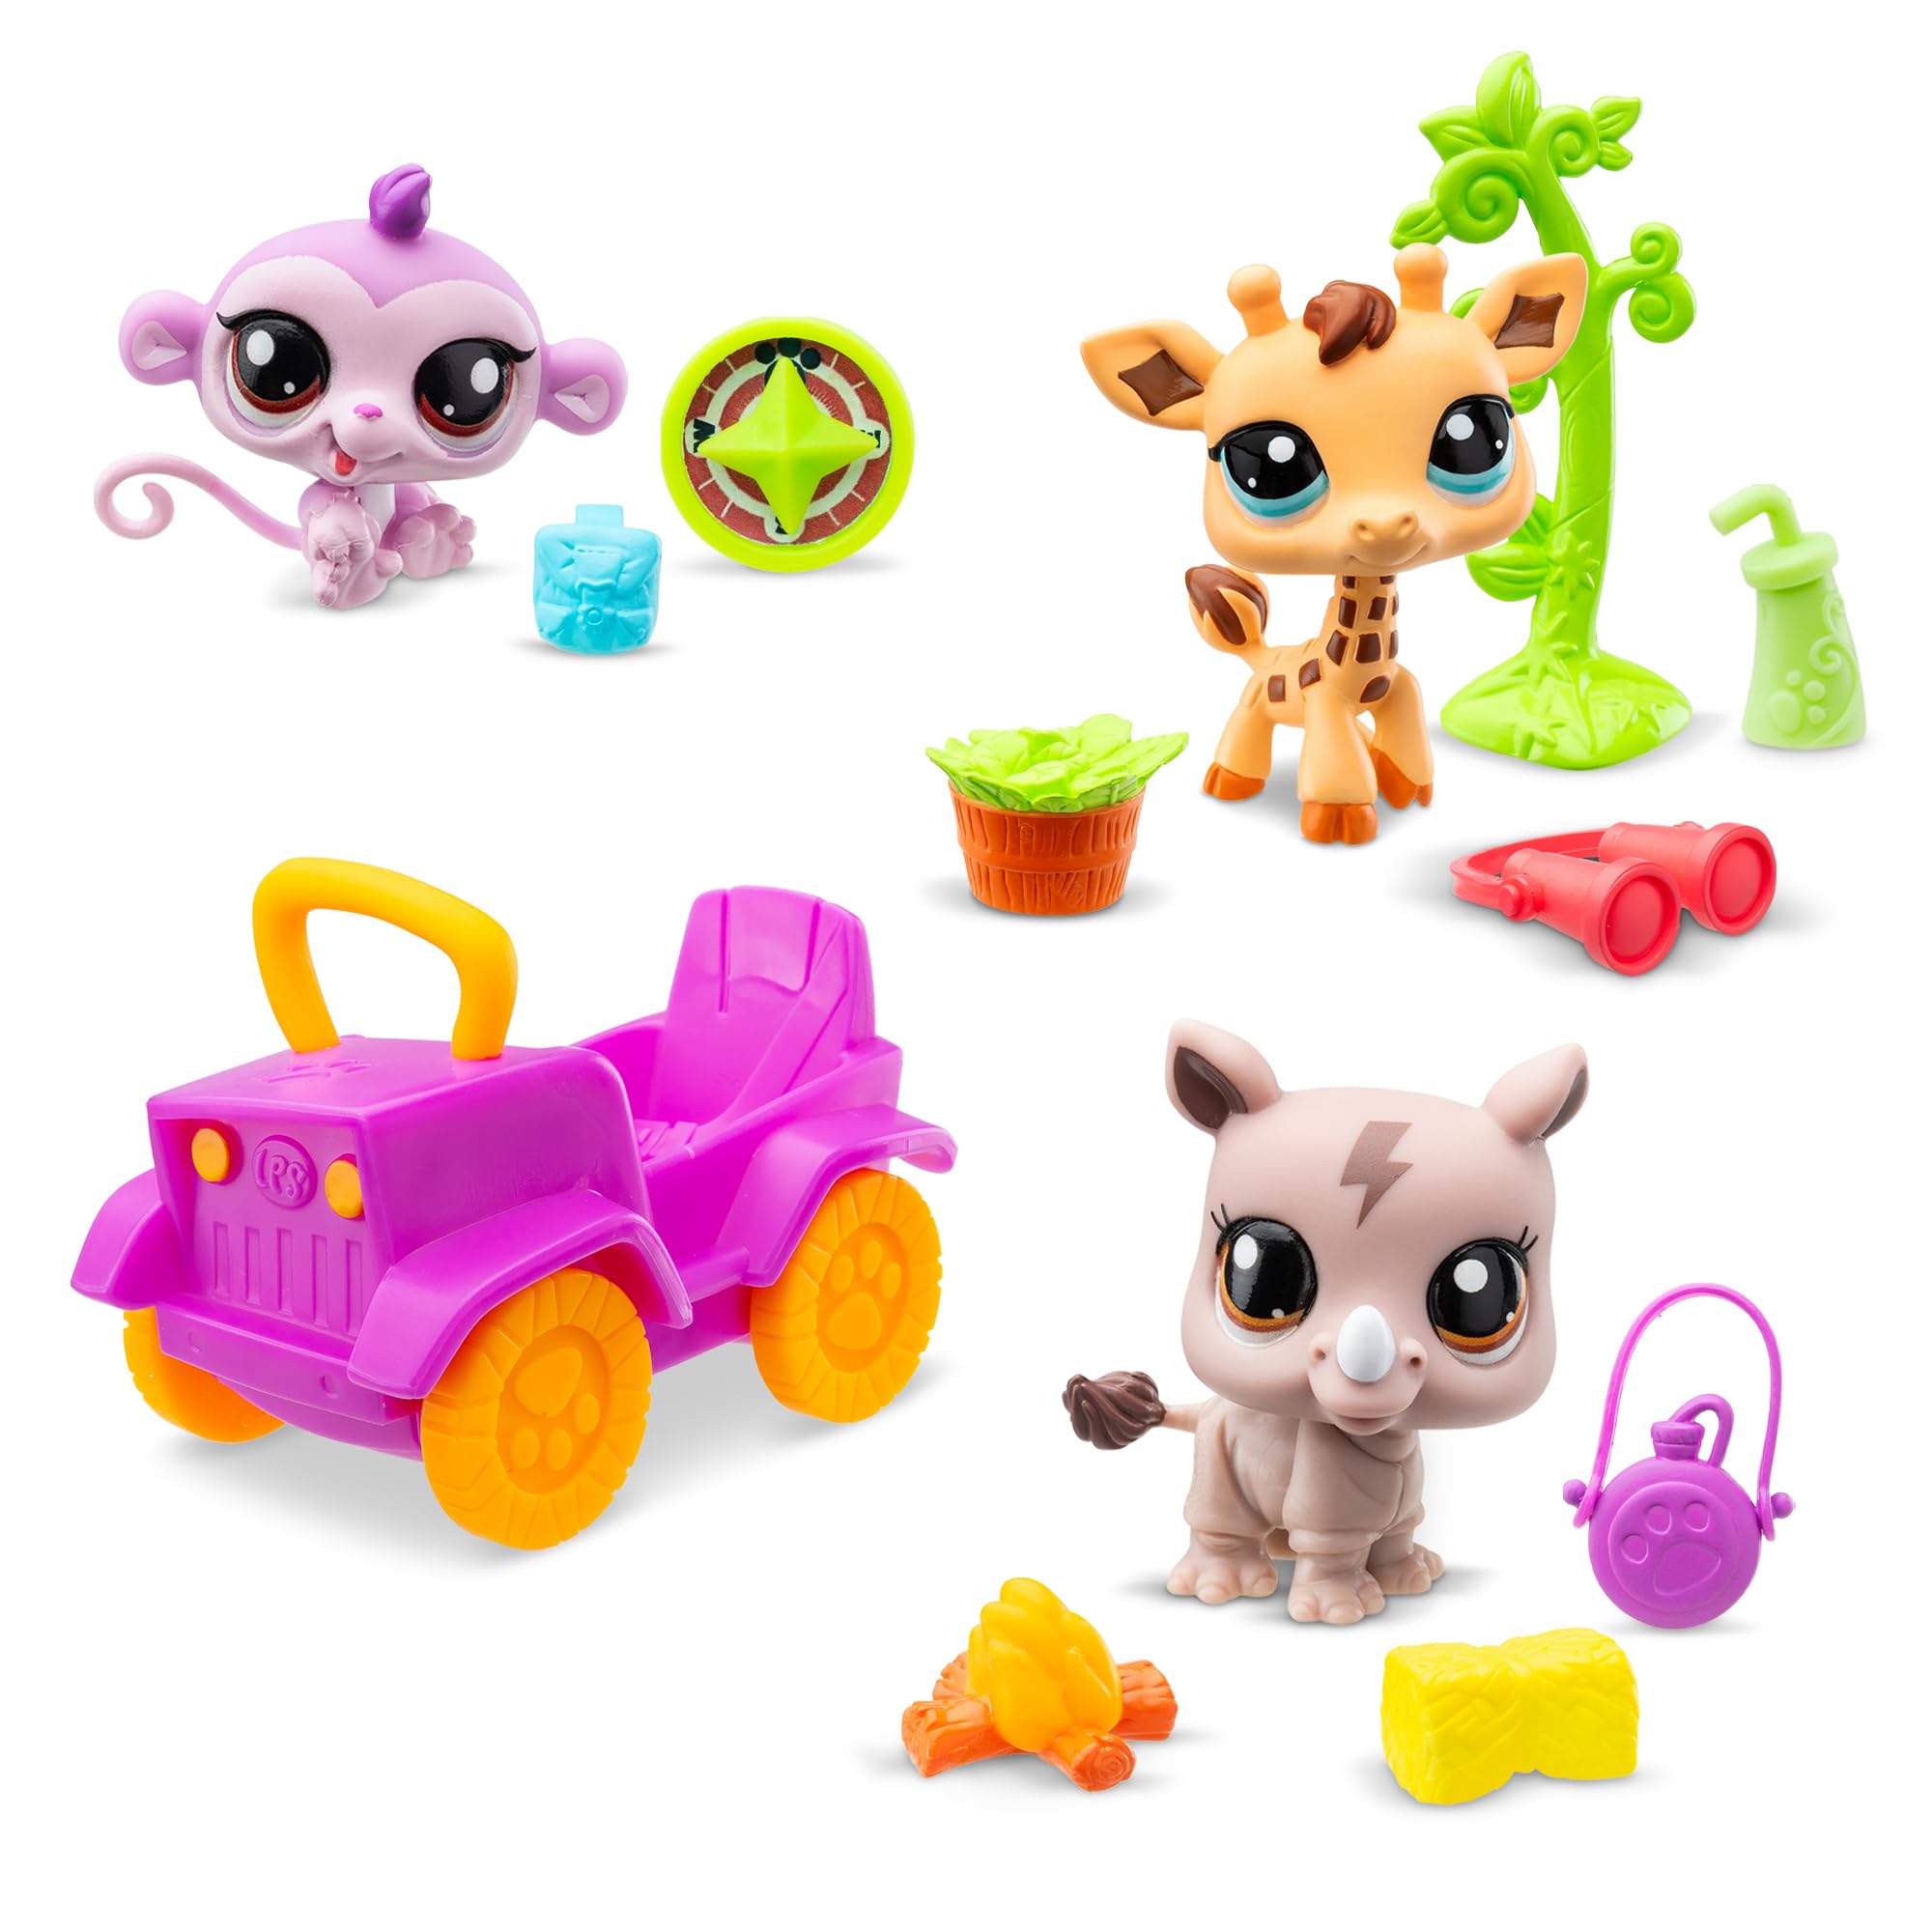 Littlest Pet Shop, Safari Play Pack - Gen 7, Pets #53,#54, #55, Authentic LPS Bobble Head Figure, Collectible Imagination Toy Animal, Kidults, Girls, Boys, Kids, Tweens Ages 4+